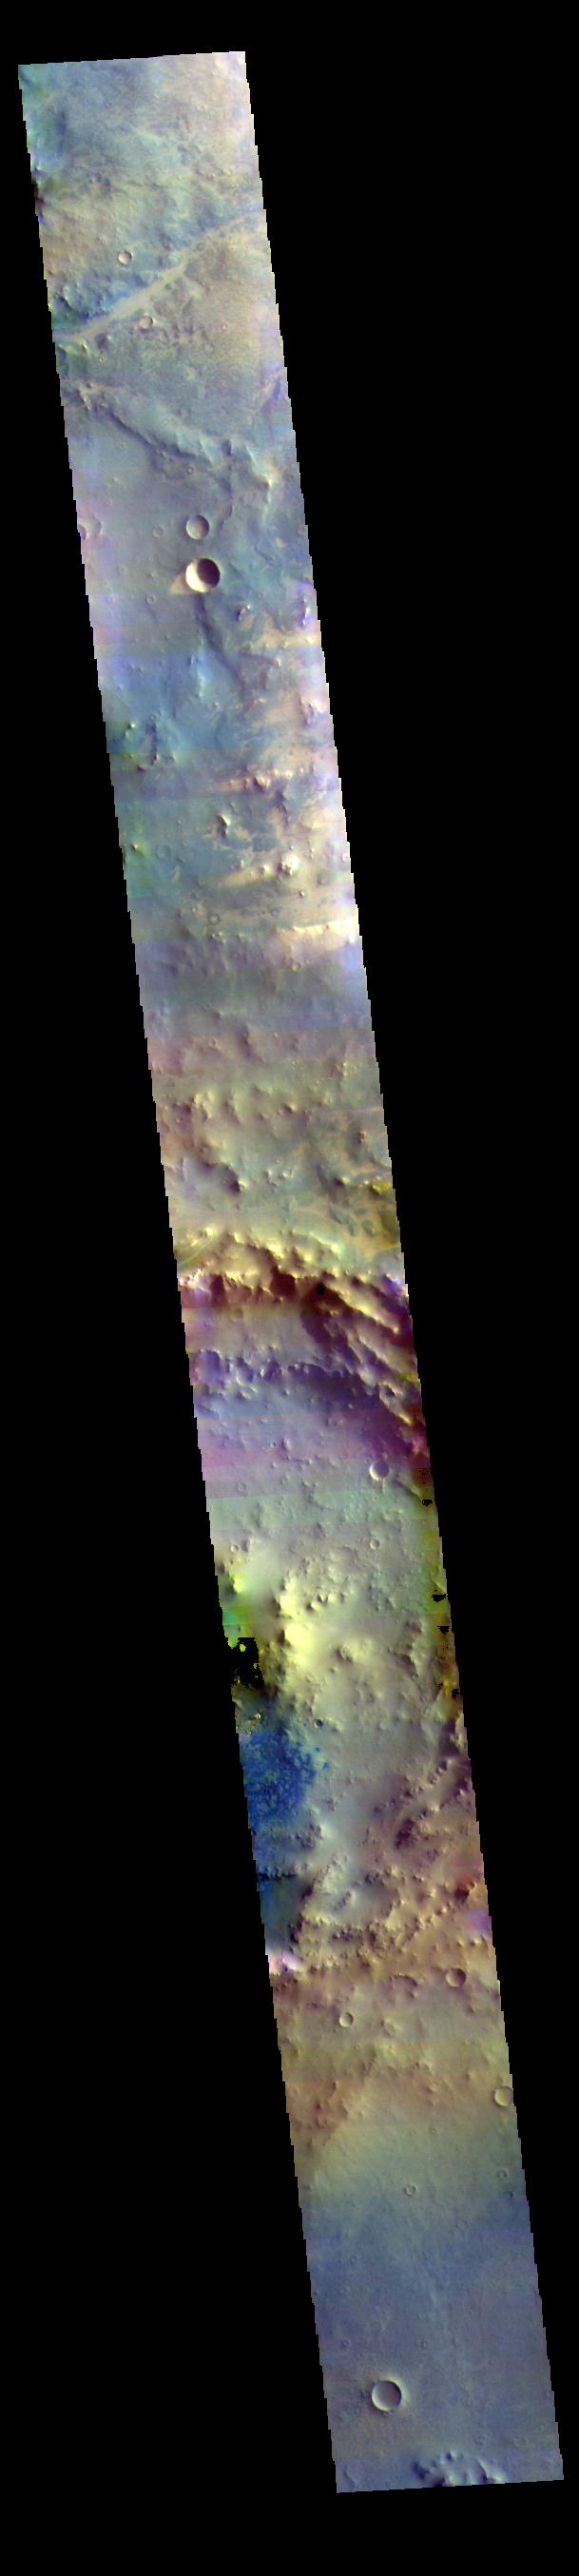 PIA24505: Noachis Terra - False Color